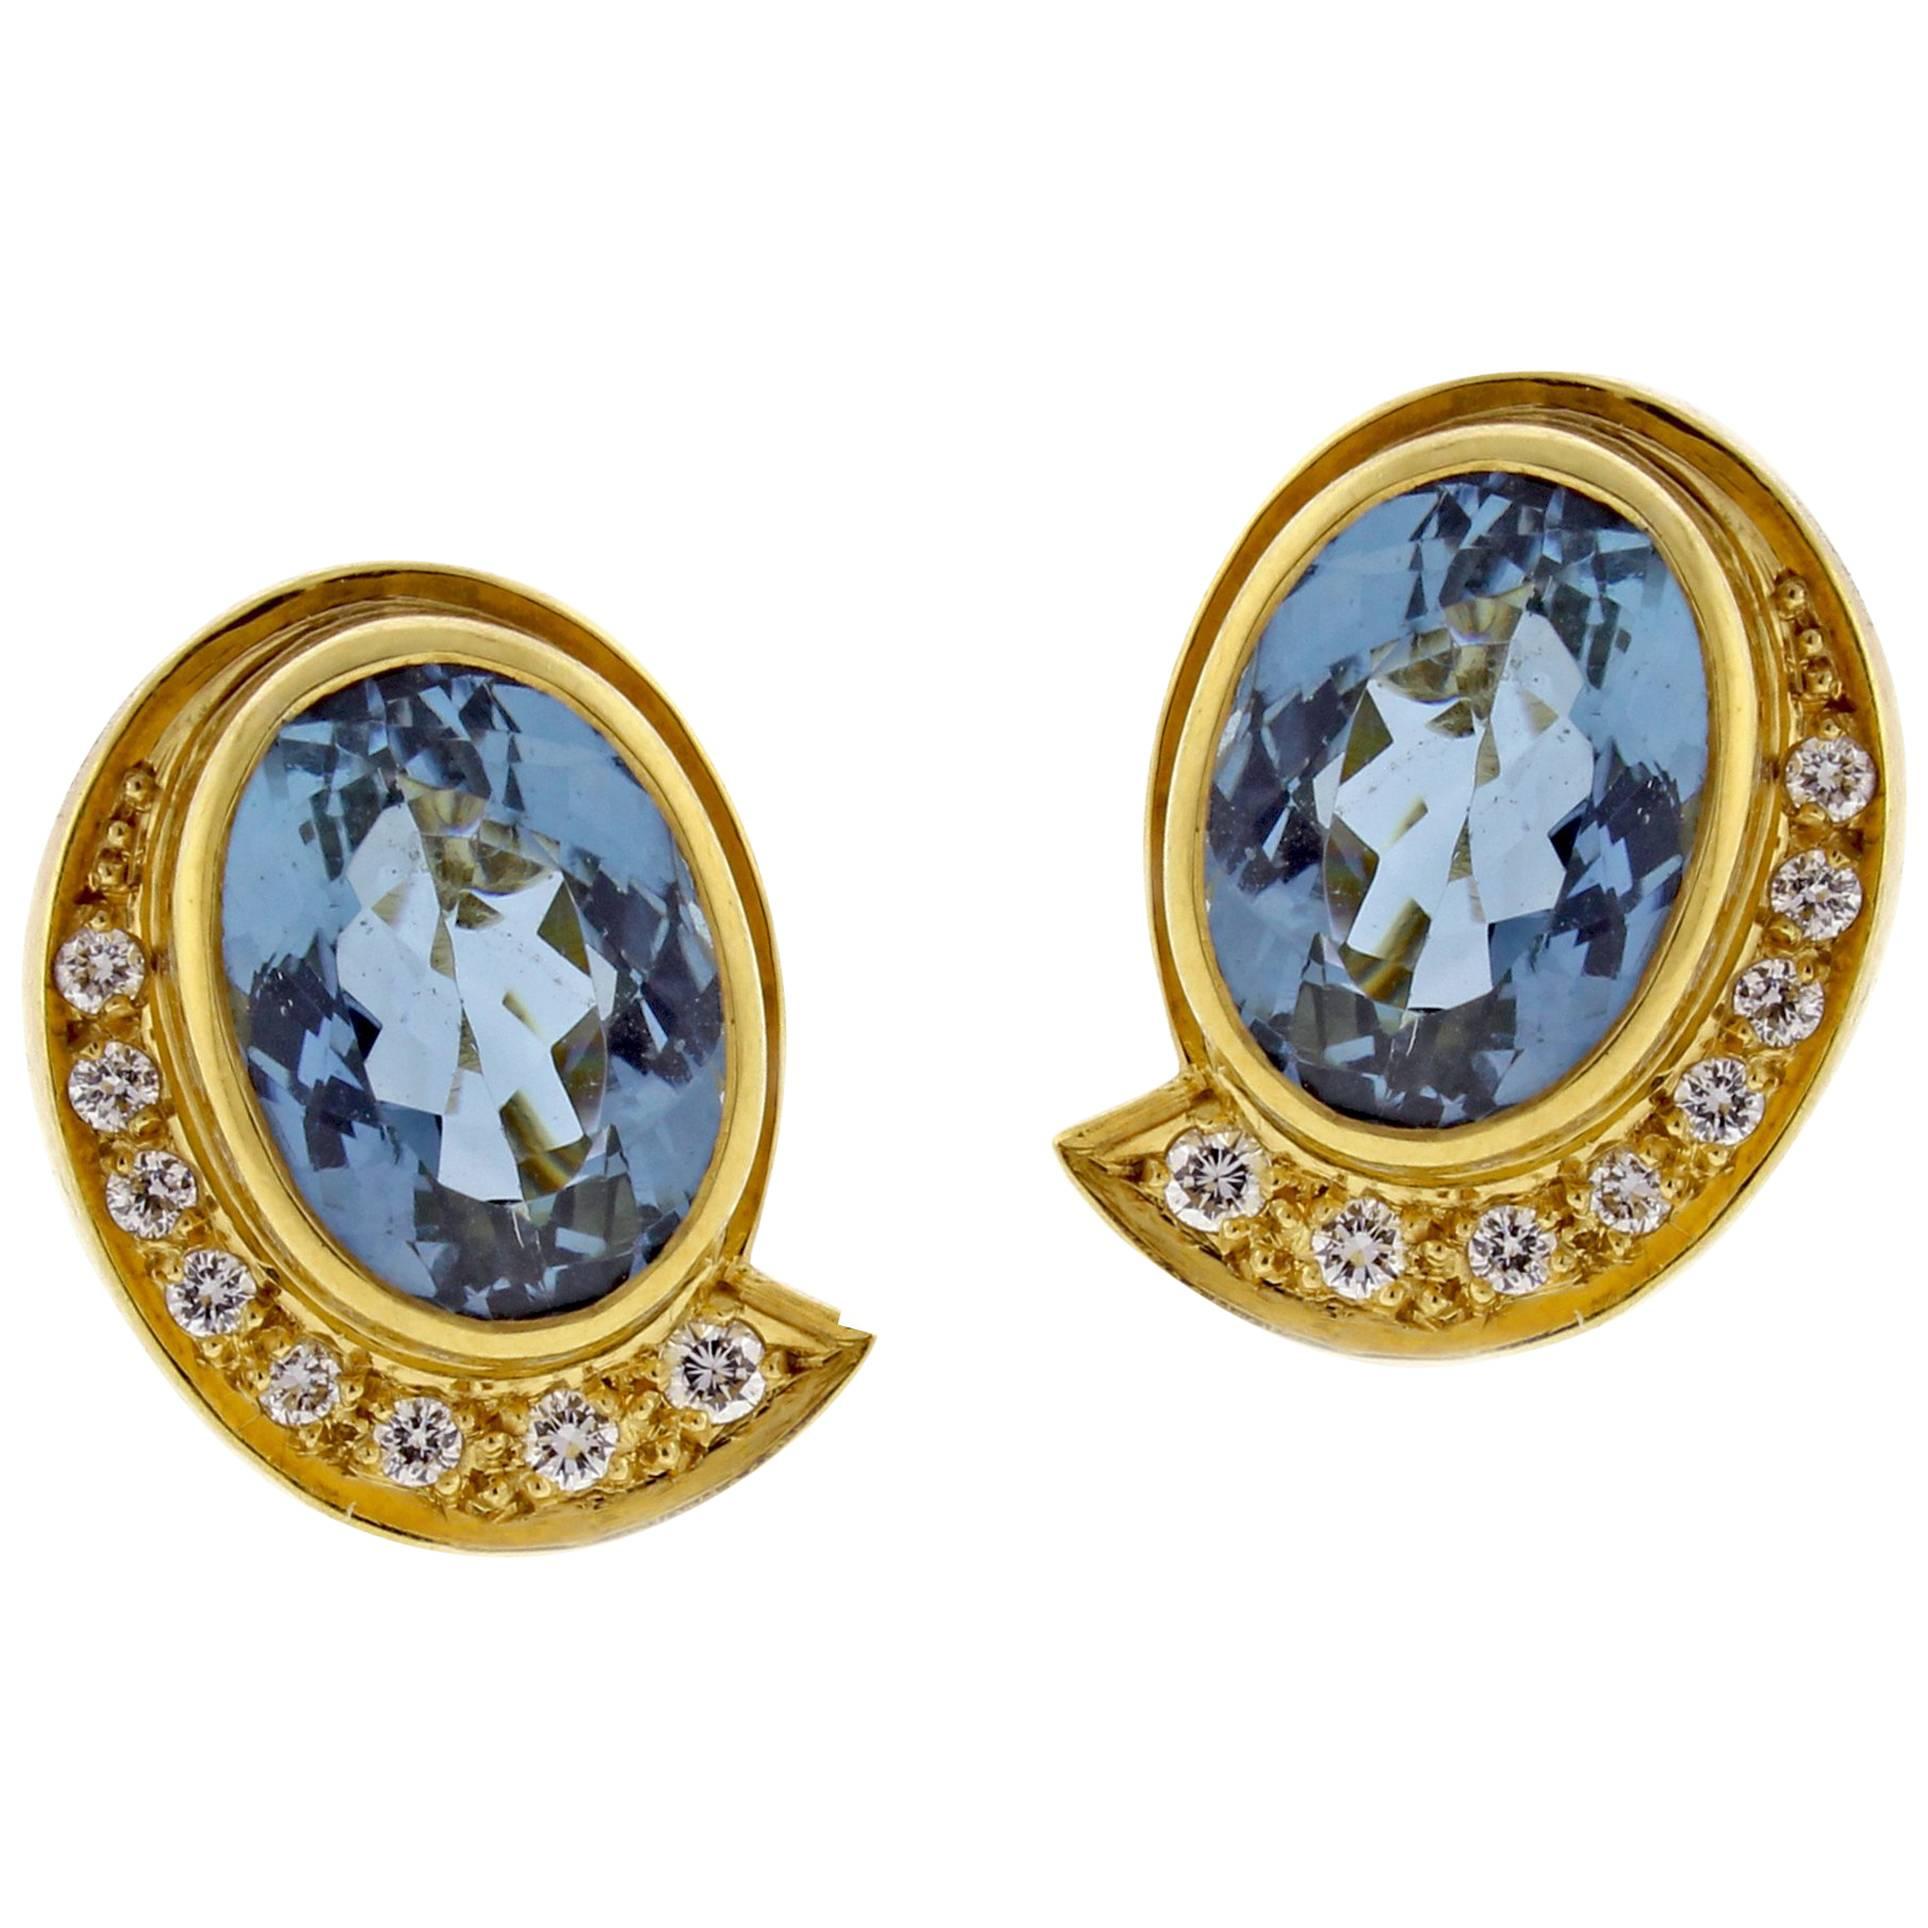 Burle Marx Oval Aquamarine and Diamond Earrings